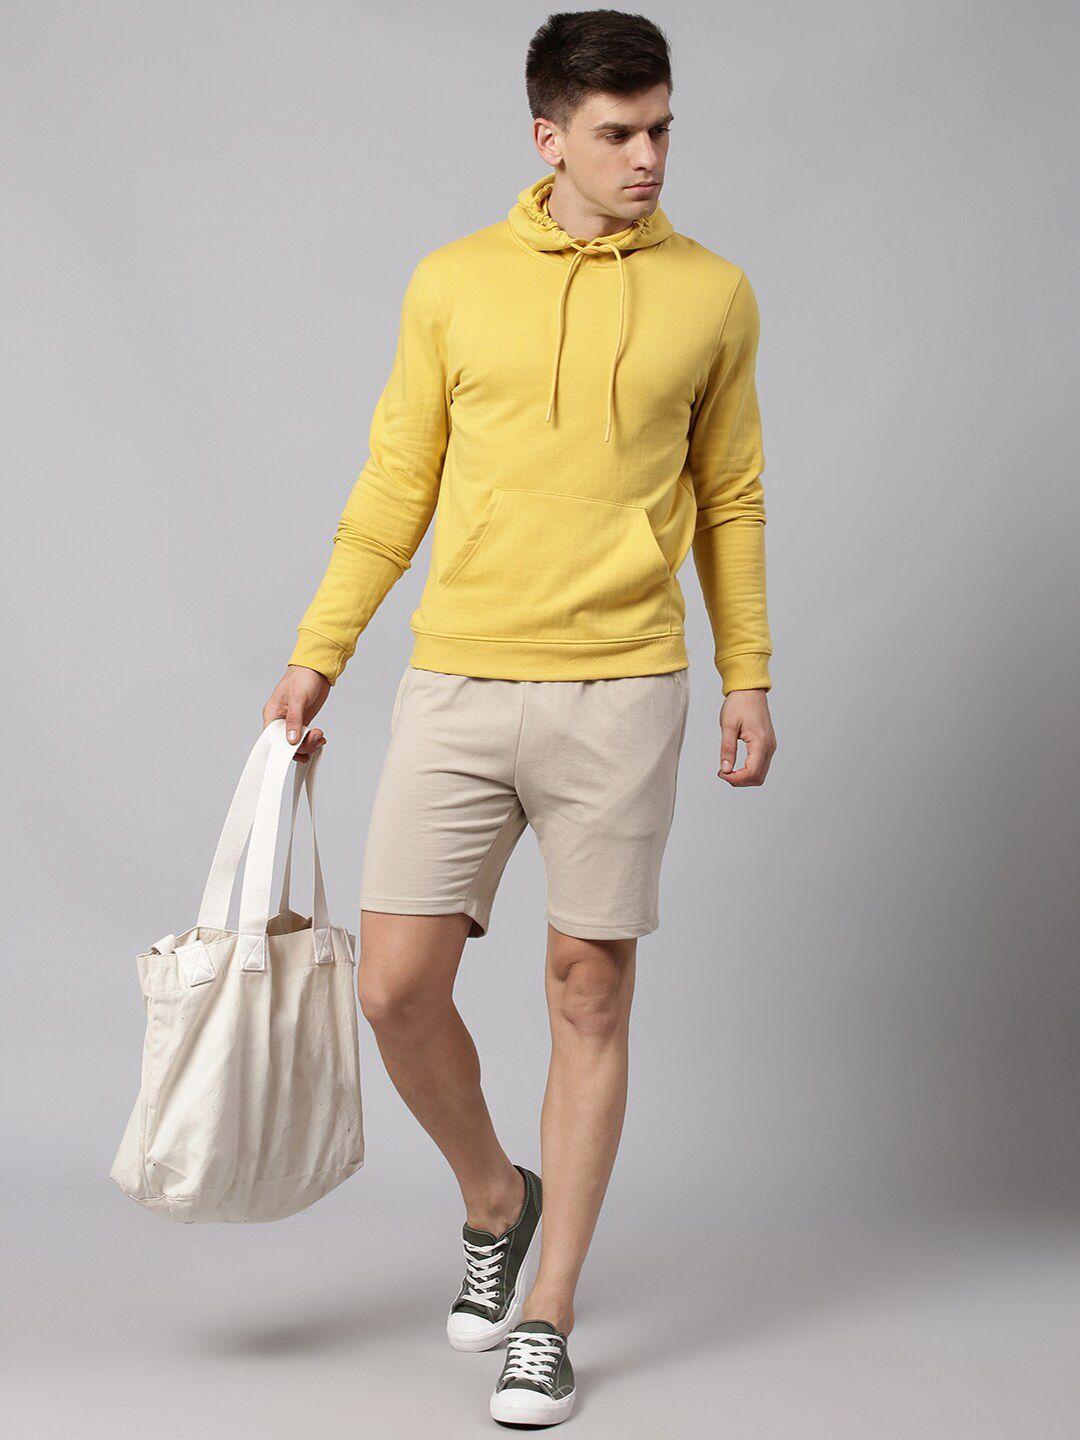 high-star-men-yellow-hooded-fleece-sweatshirt